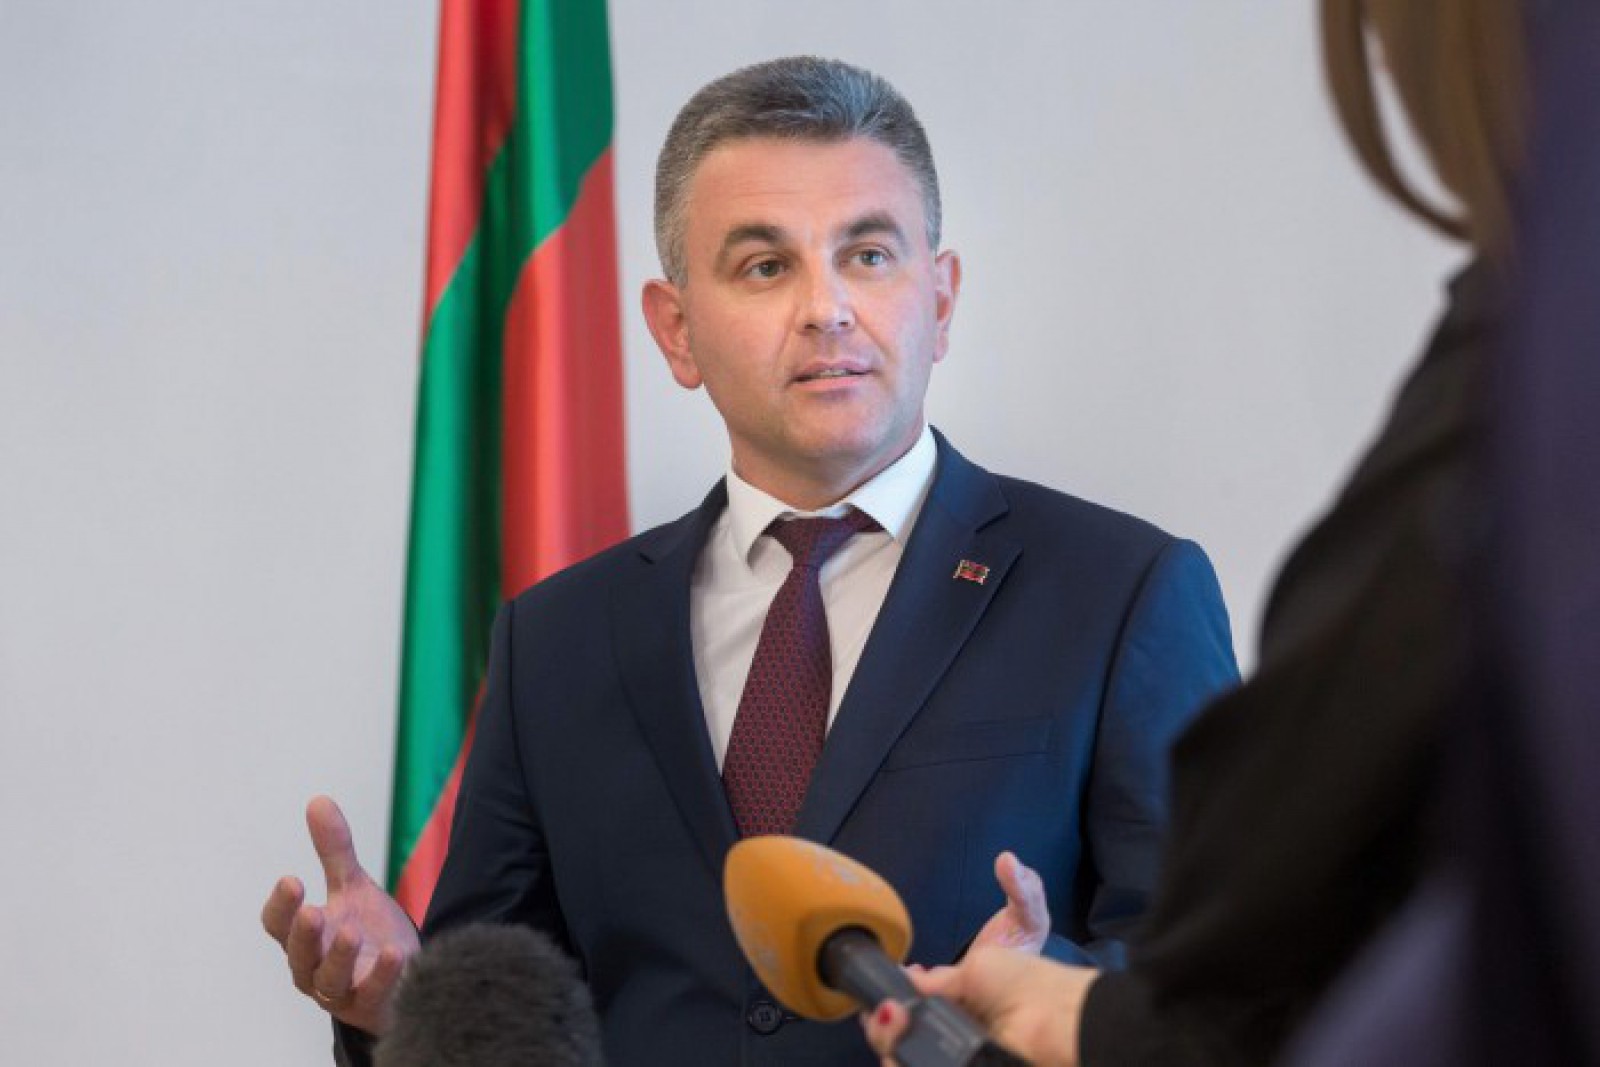 vadim-krasnoselskii-independenta-transnistriei-este-o-problema-tehnica-si-poate-fi-recunoscuta-international-ca-si-kosovo-1516793333